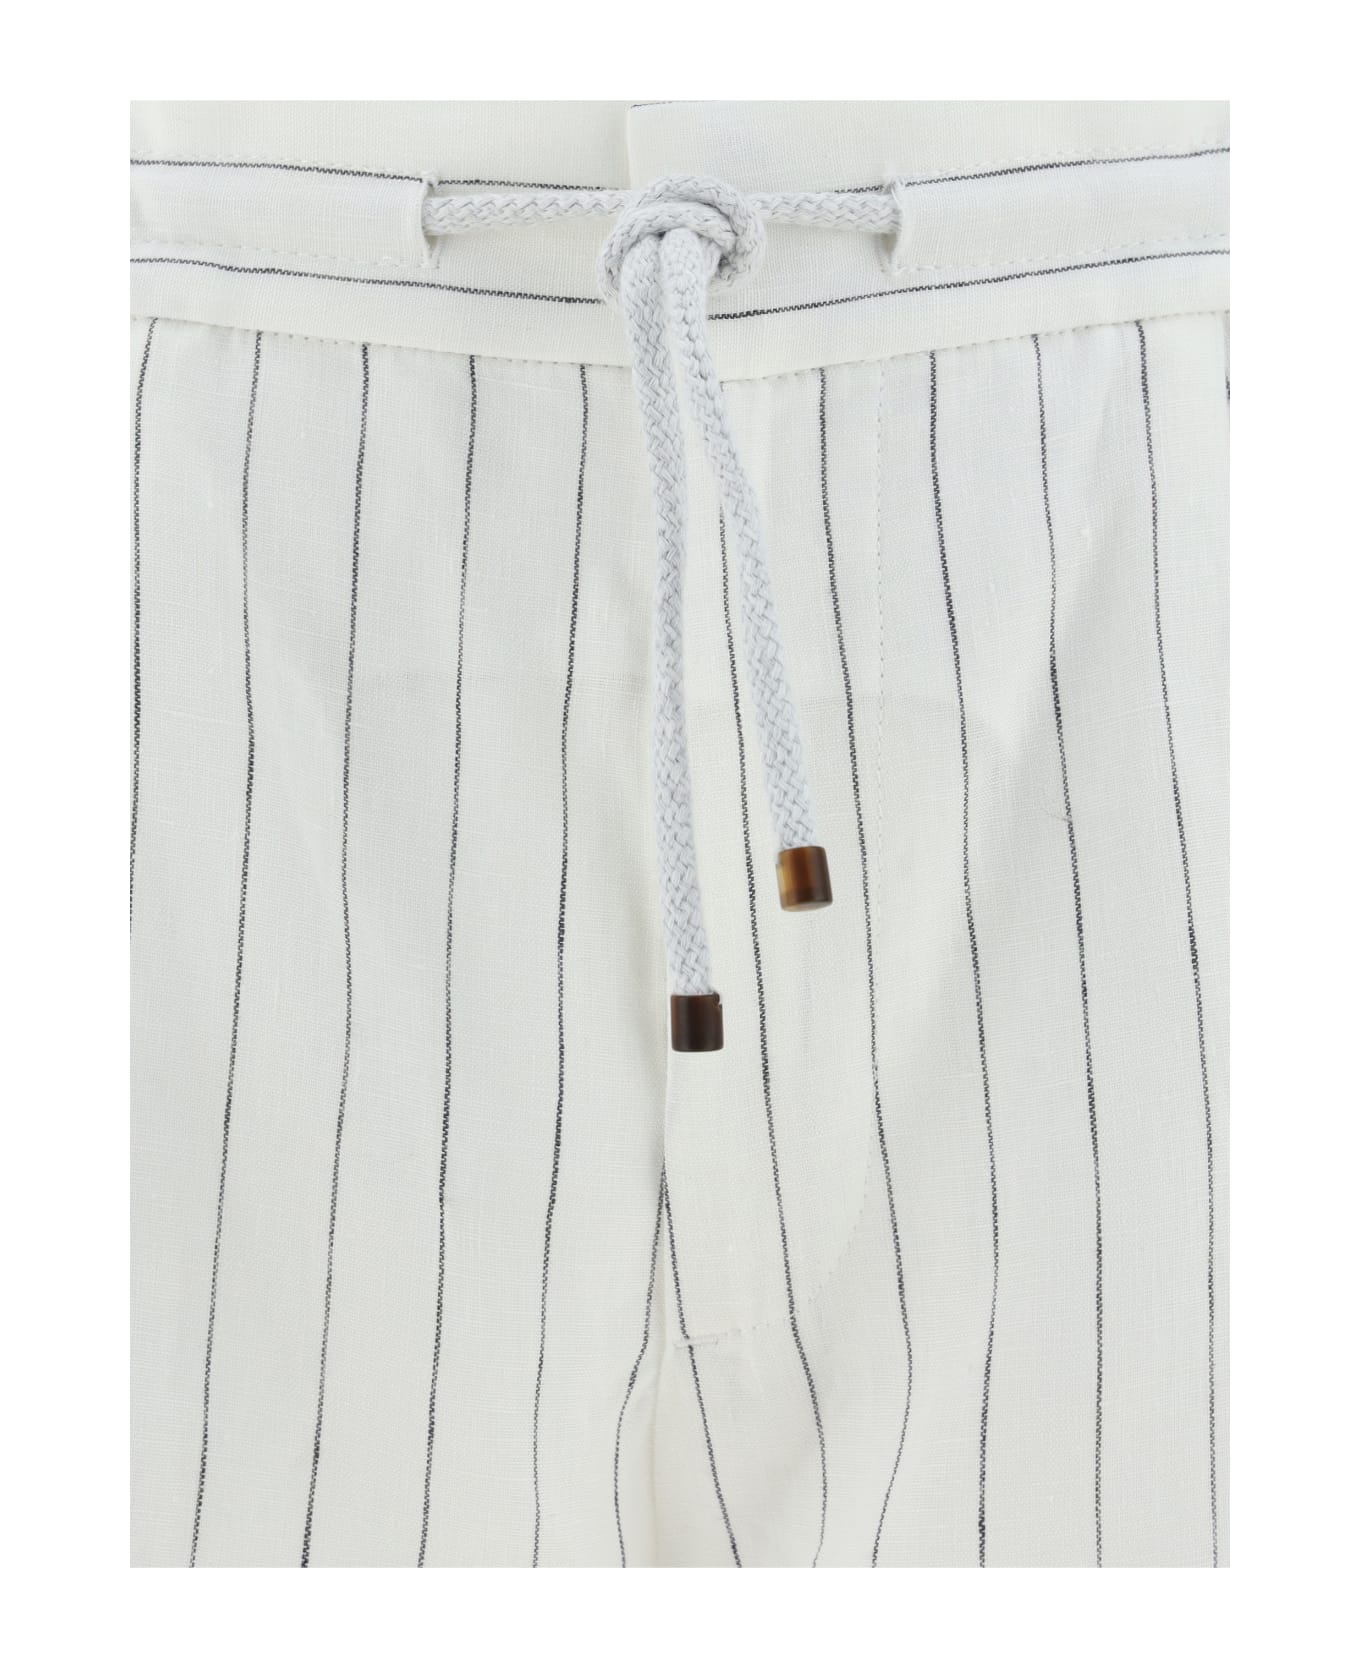 Brunello Cucinelli Linen Shorts - Bianco